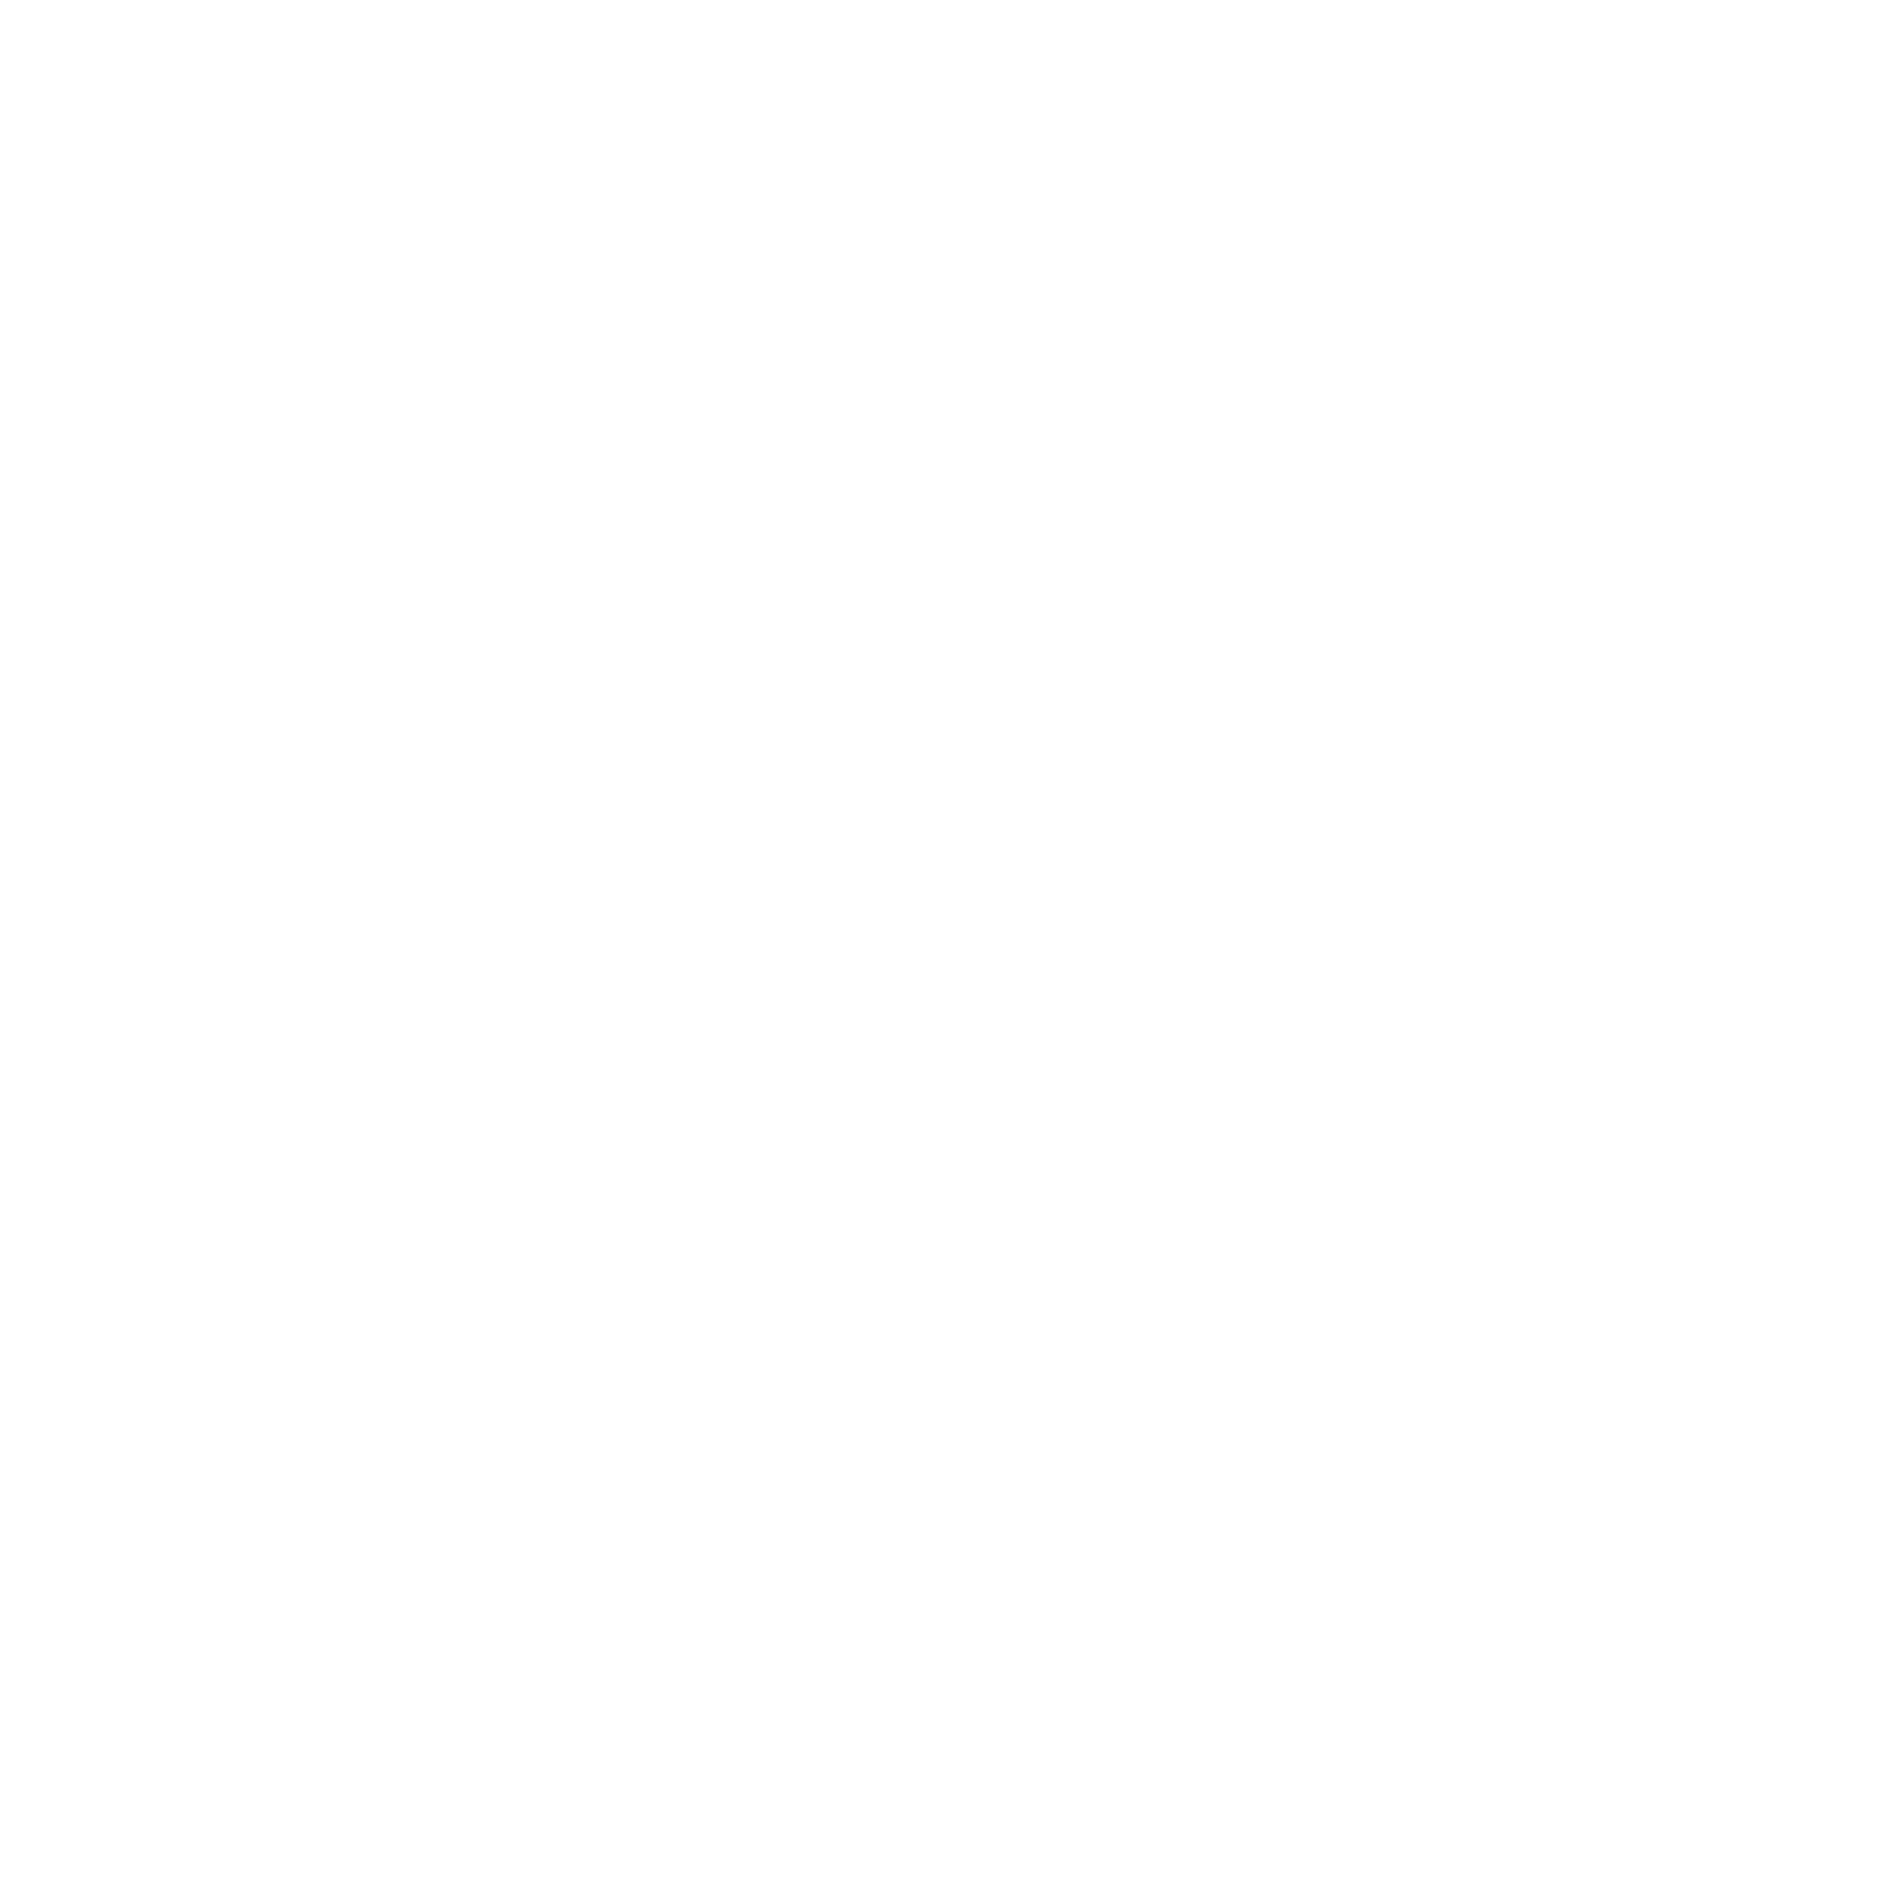 LPF Training - Maroubra